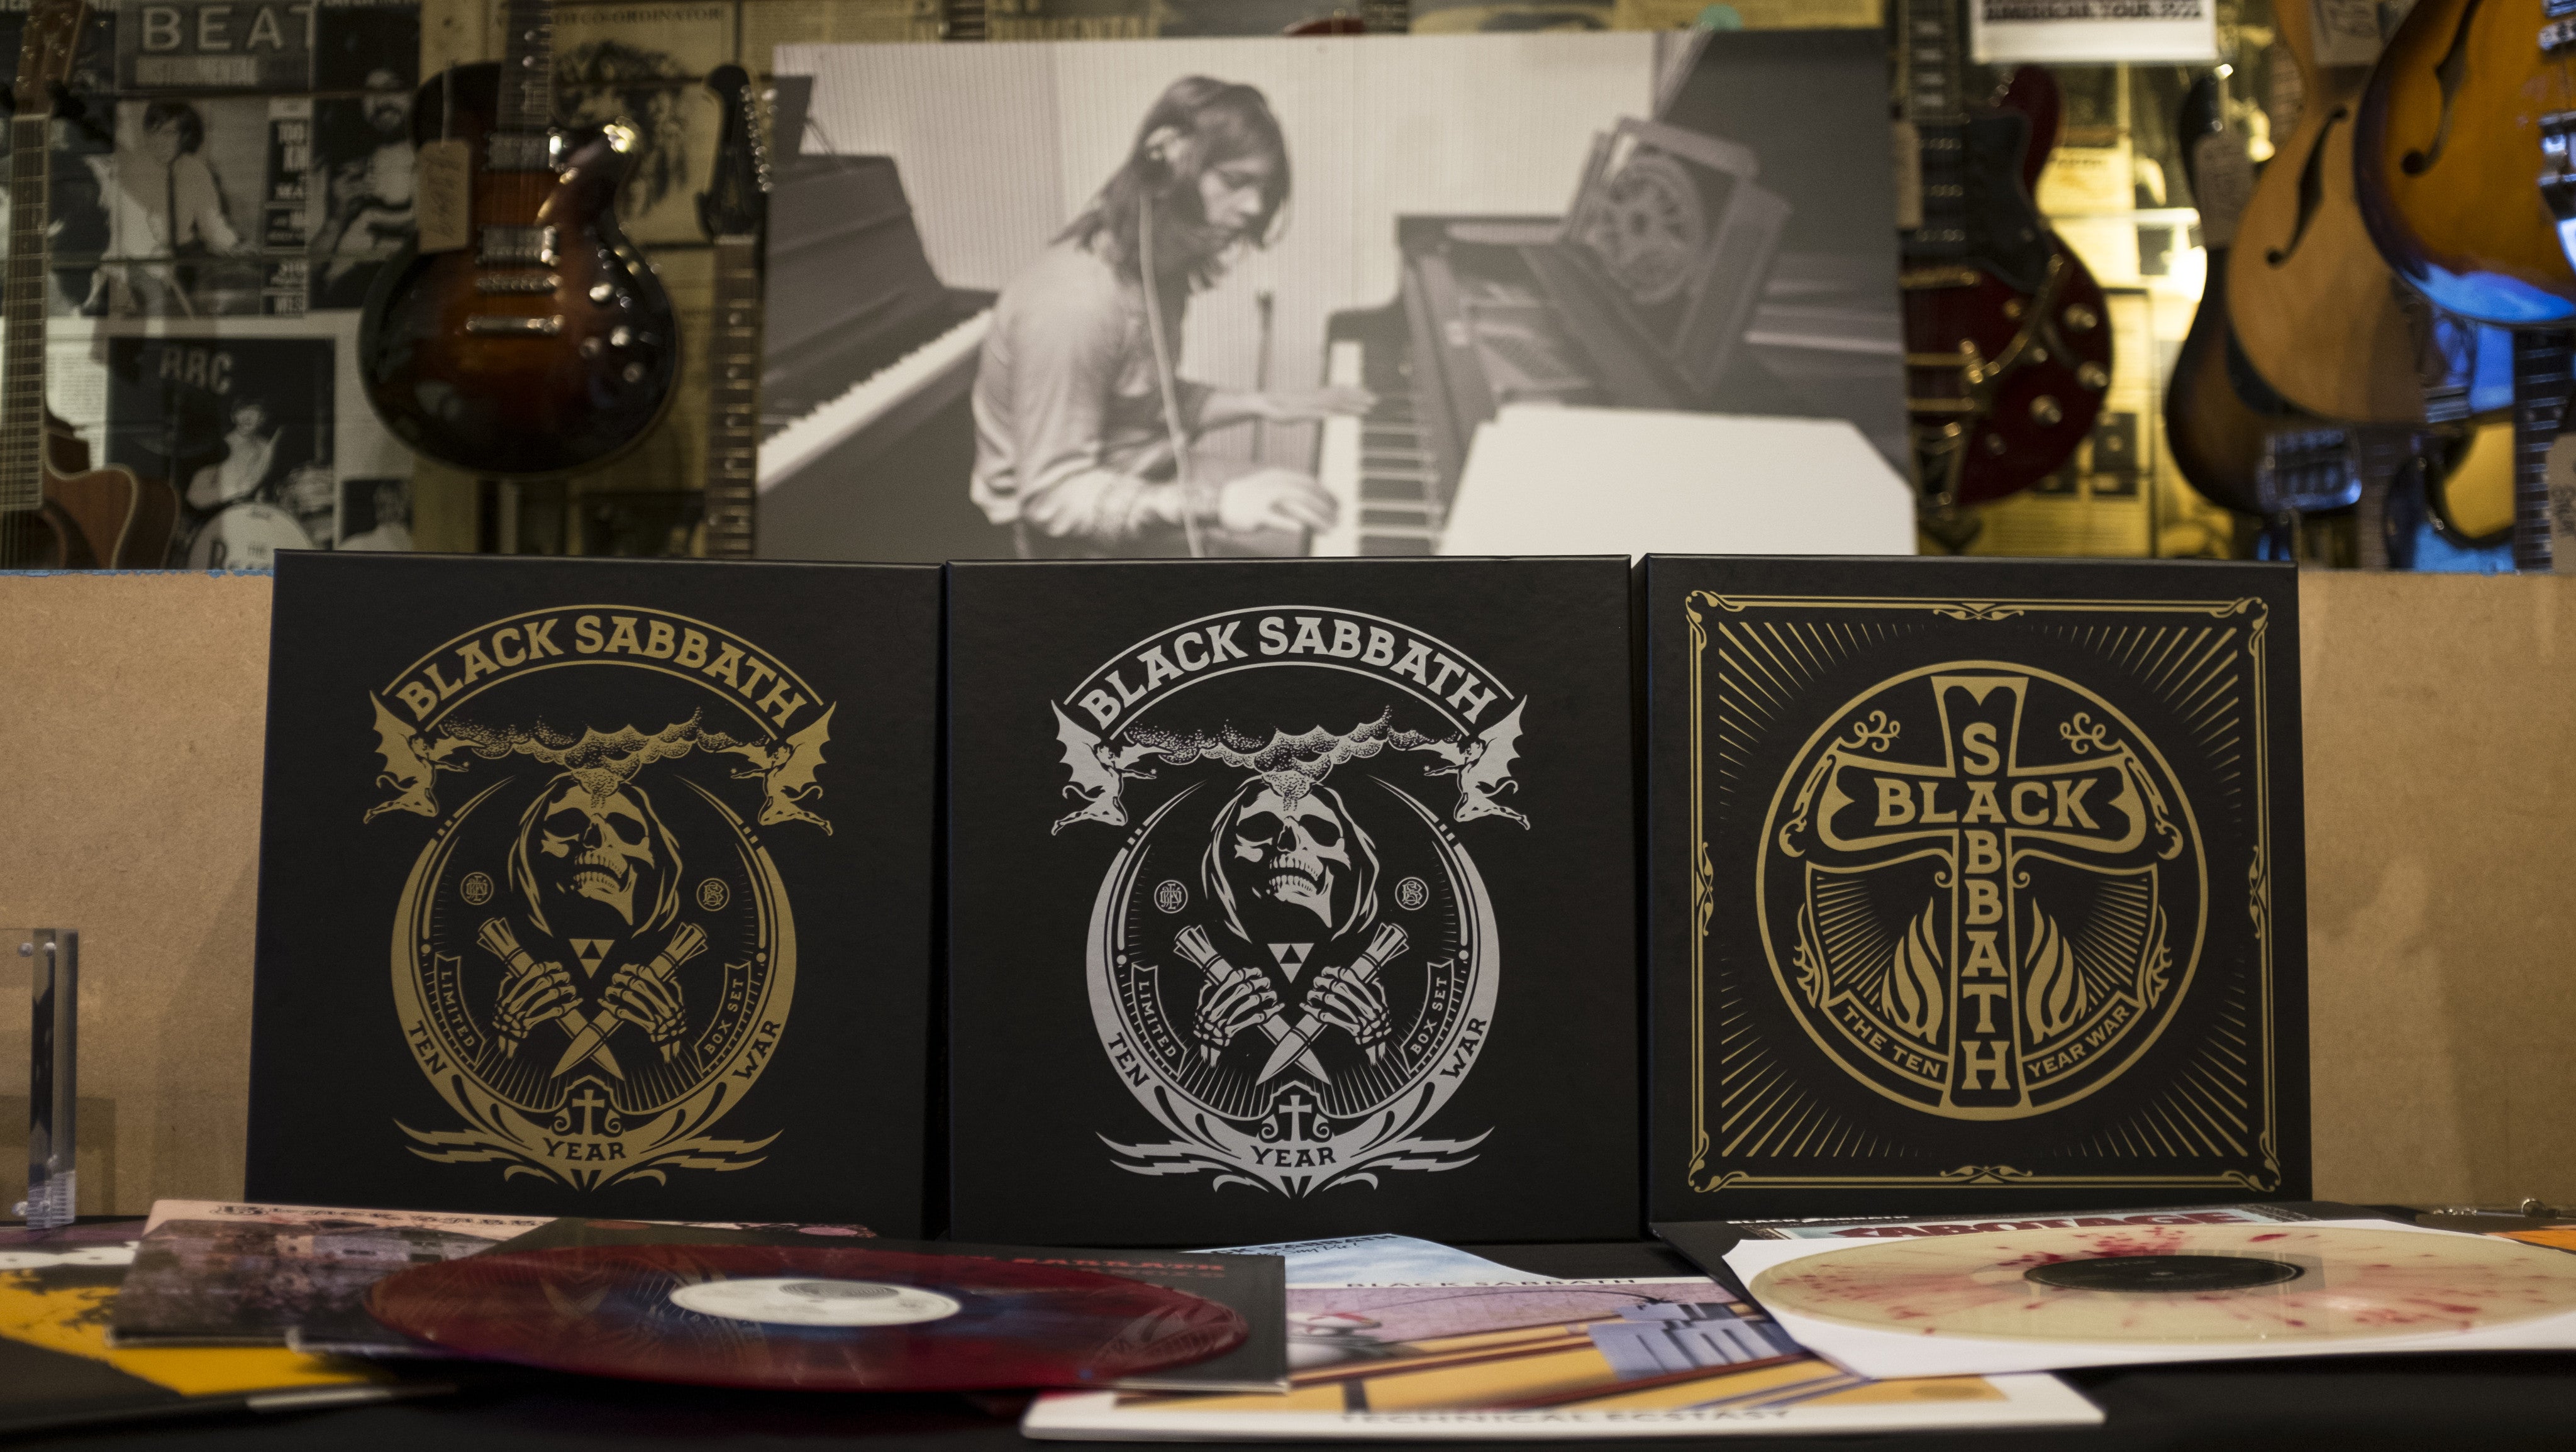 Black Sabbath The Ten Year War Box Set Release